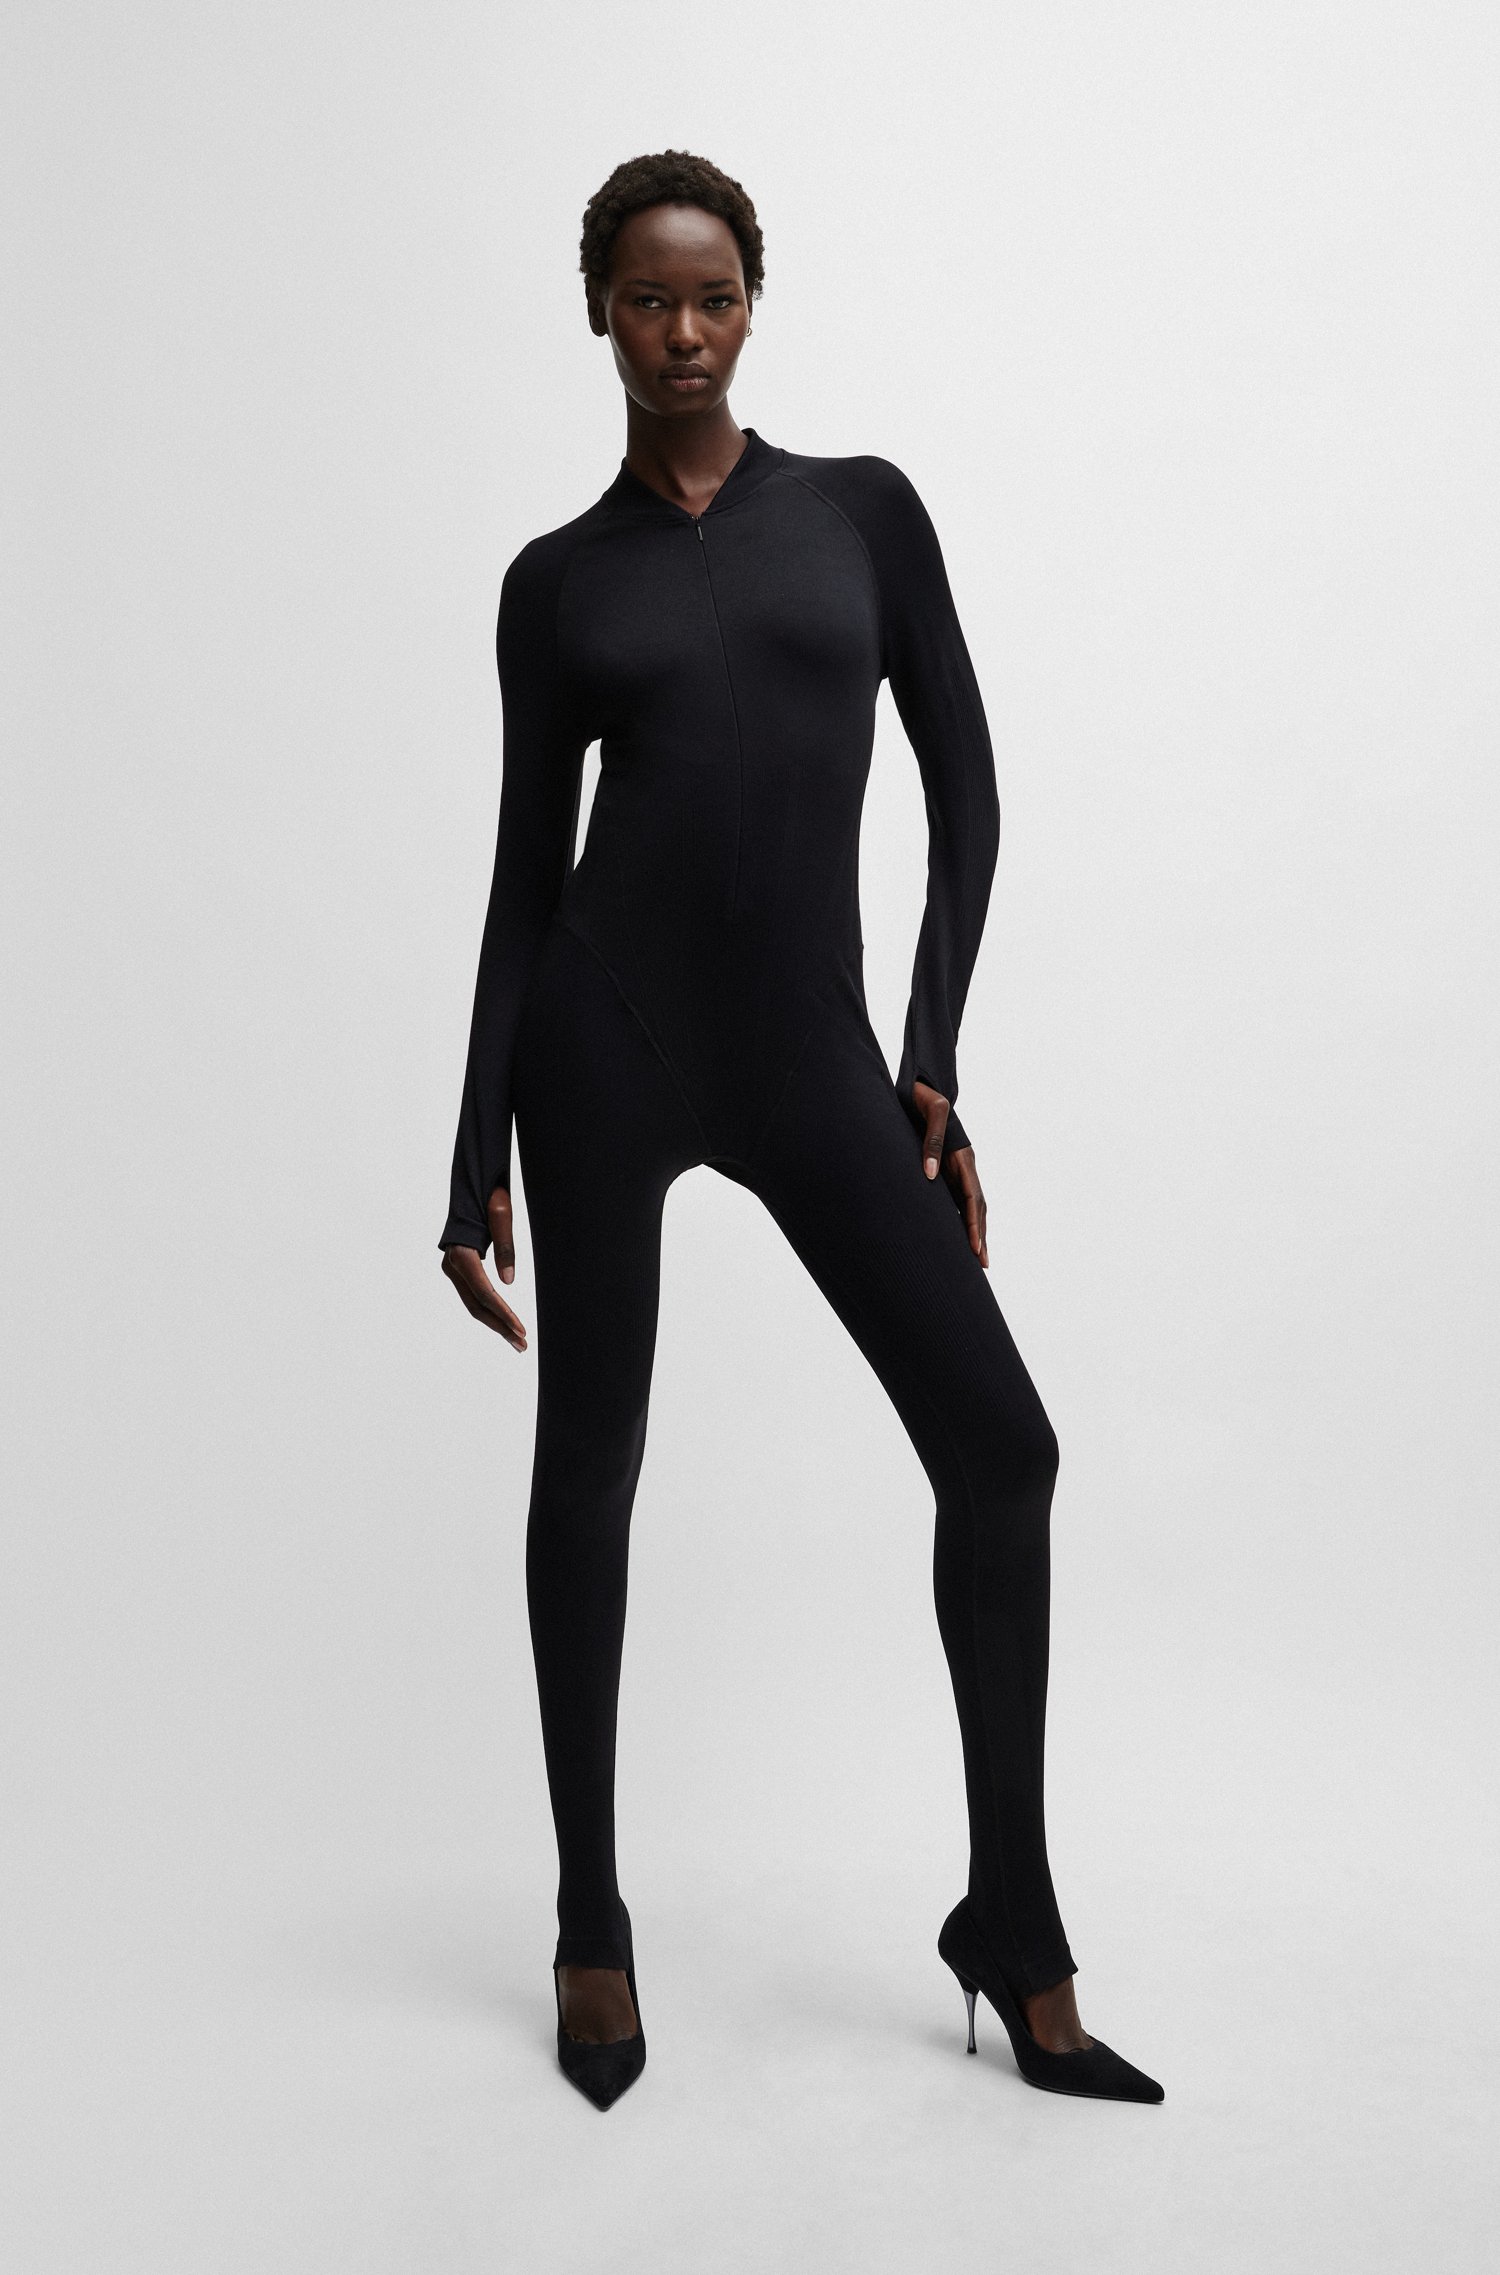 NAOMI x BOSS full-length bodysuit stretch jersey